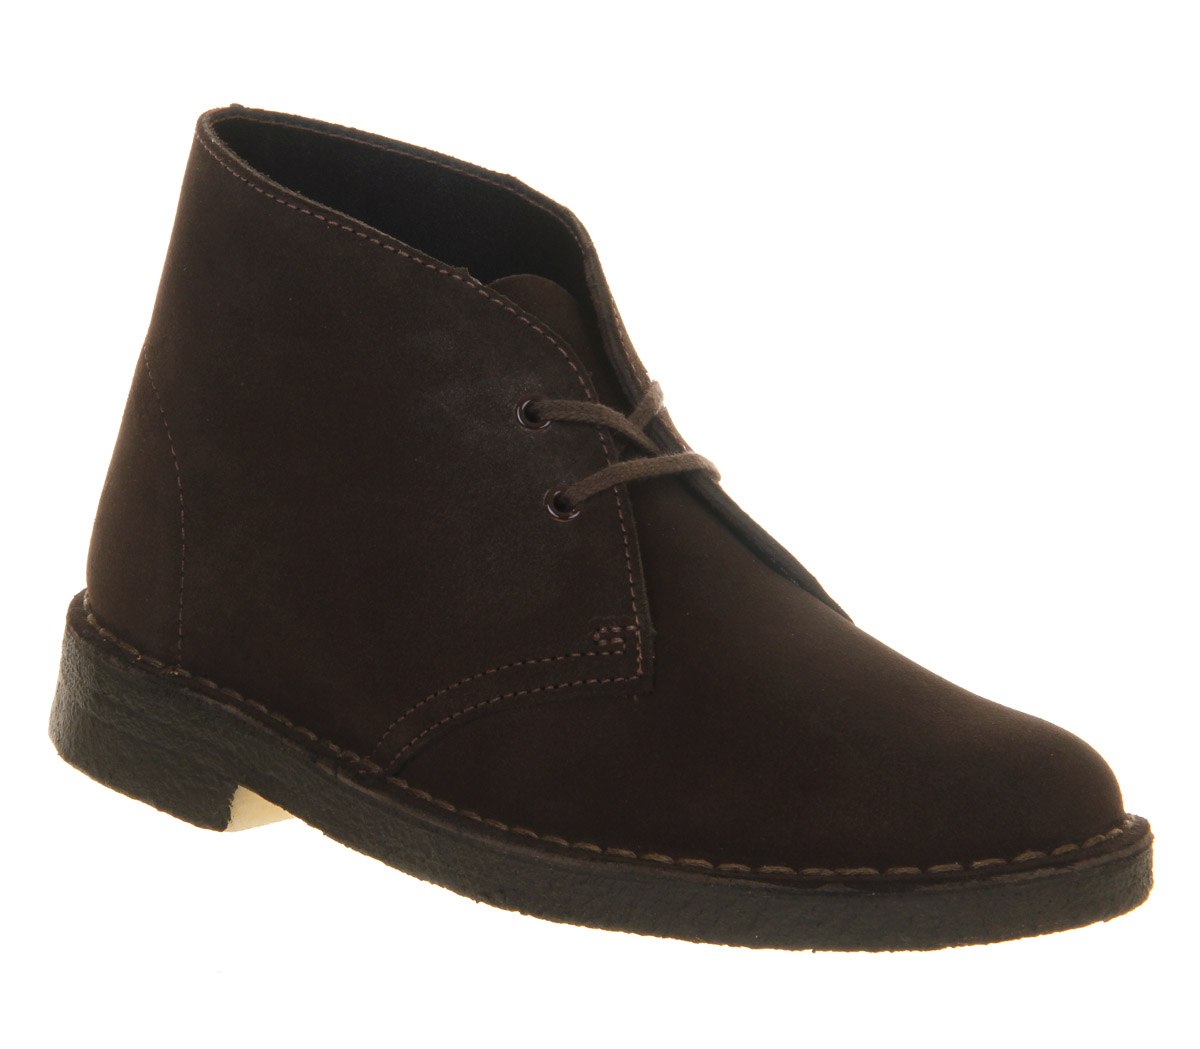 Clarks OriginalsDesert Boots (w)Brown Suede